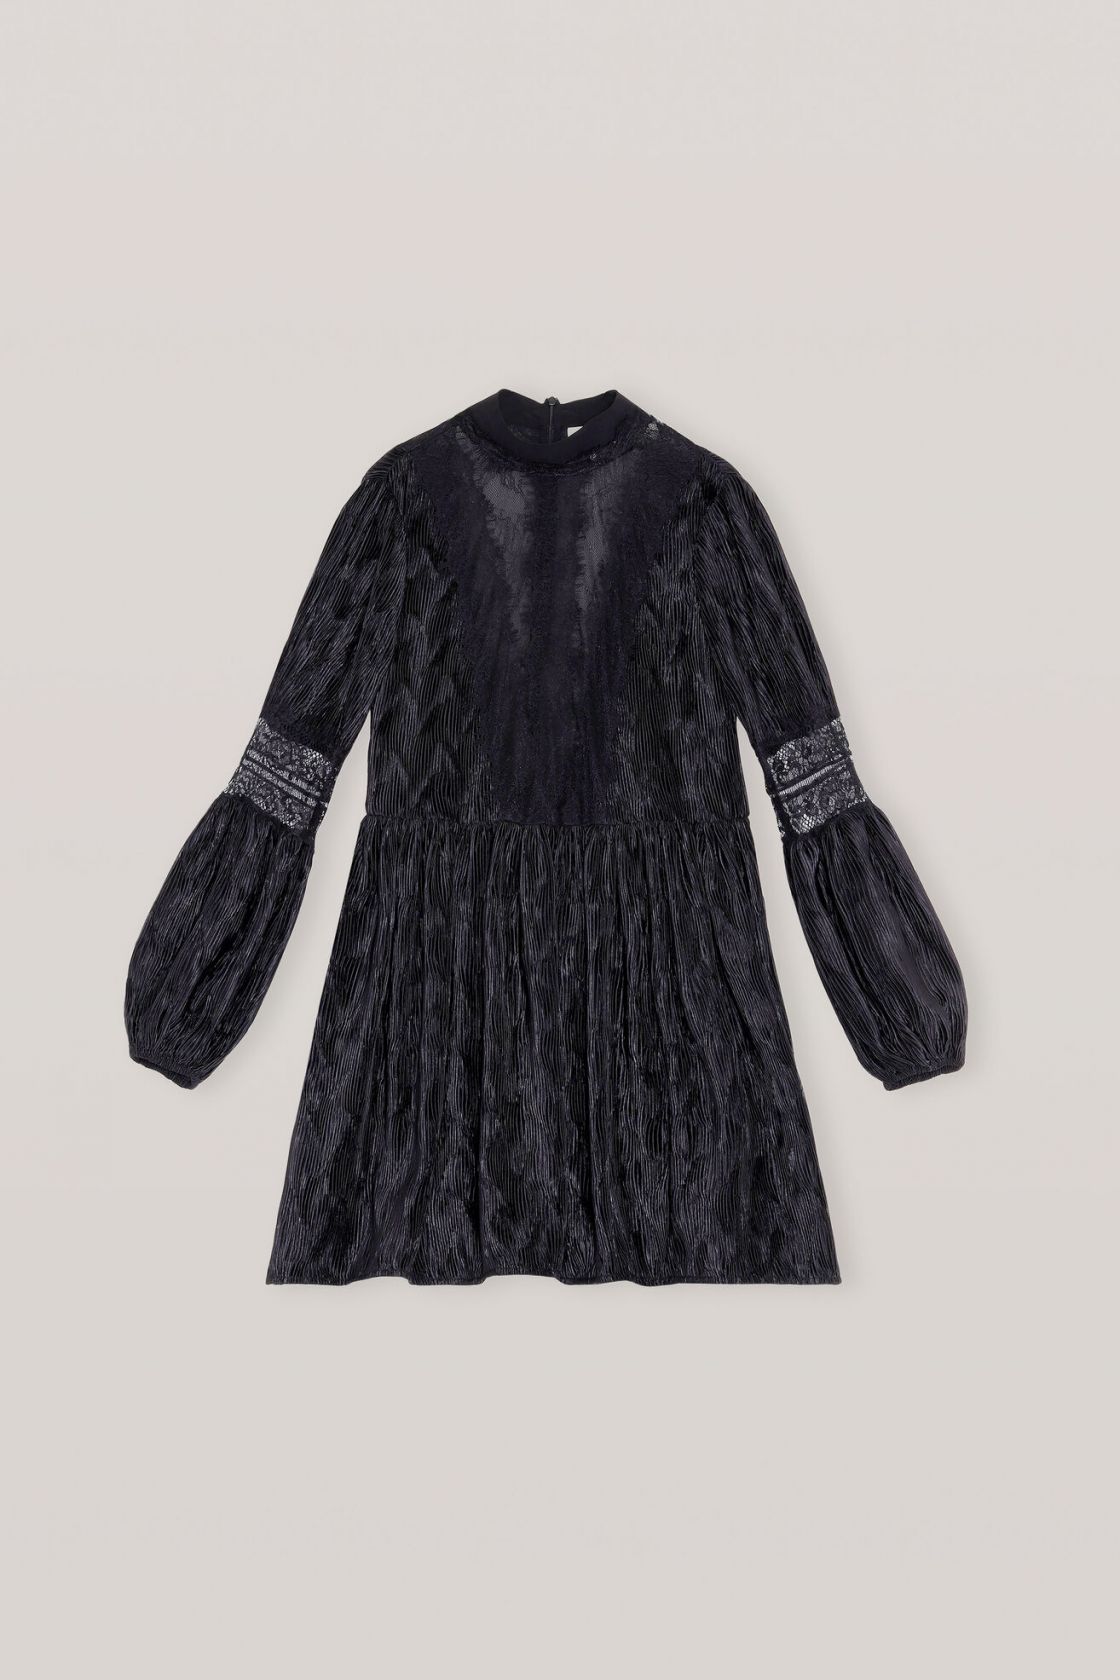 Elegant Black Dress Outfit Ideas